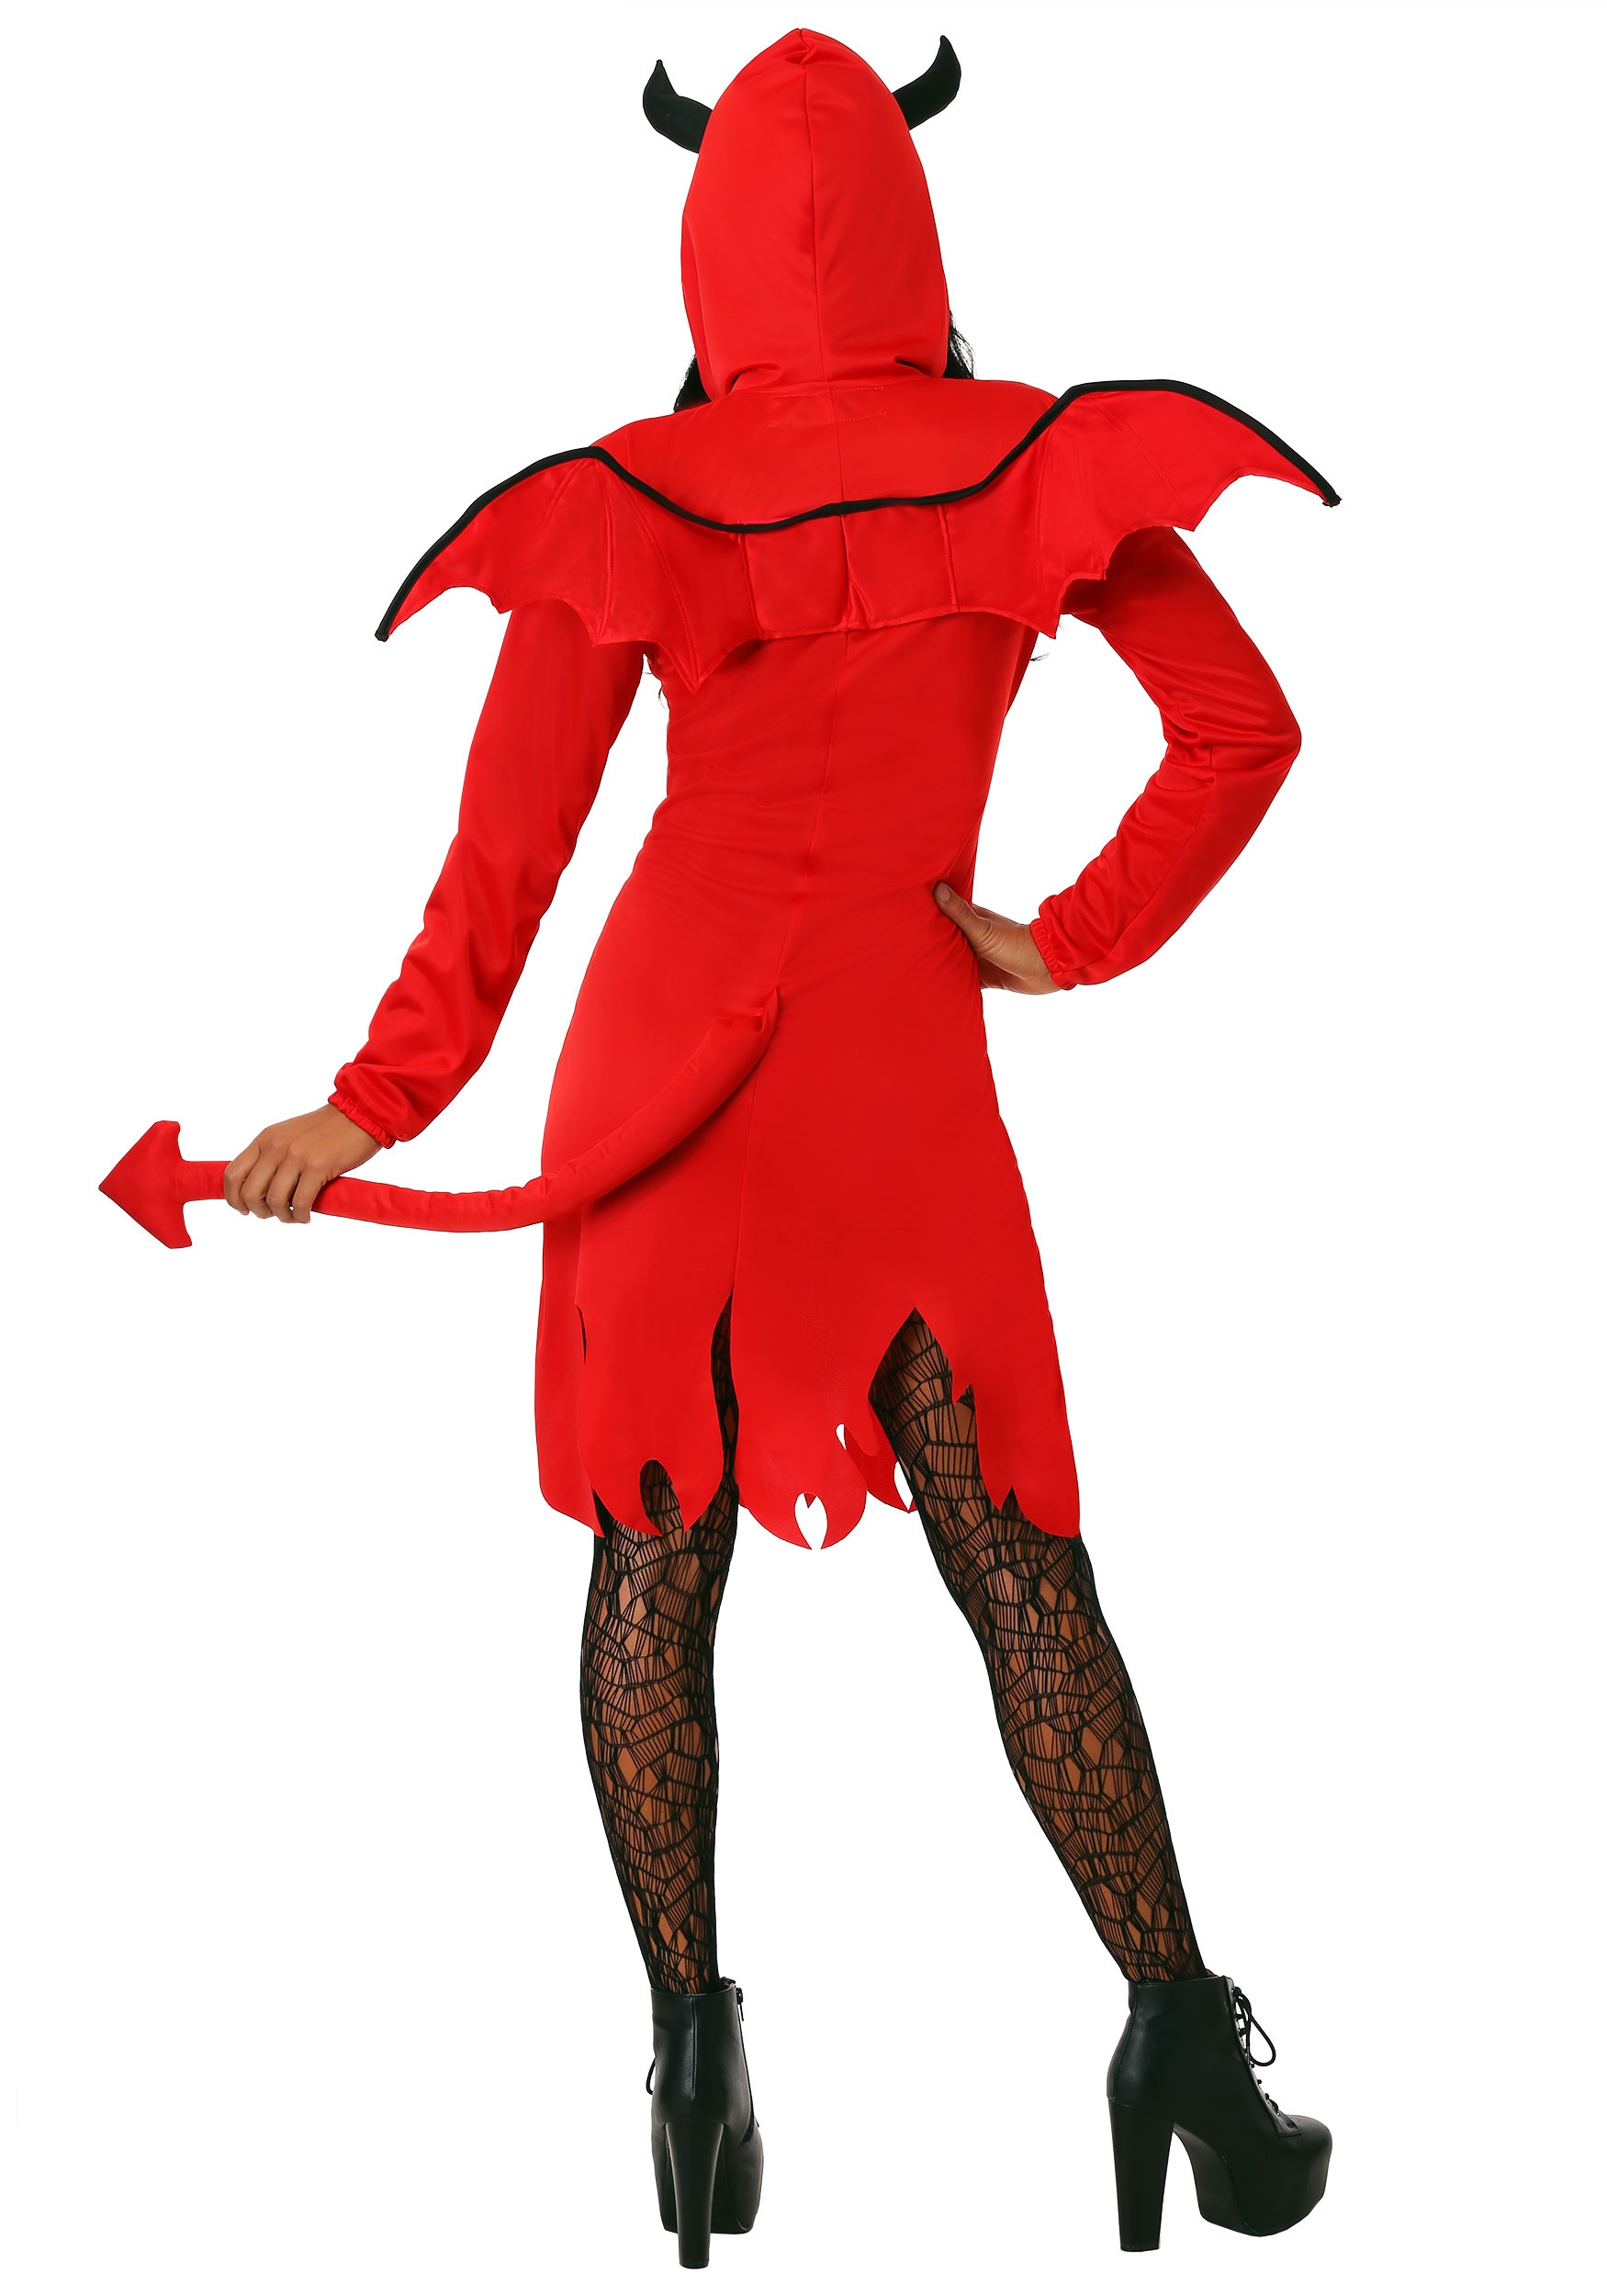 Cute Devil Fancy Dress Costume For Adults